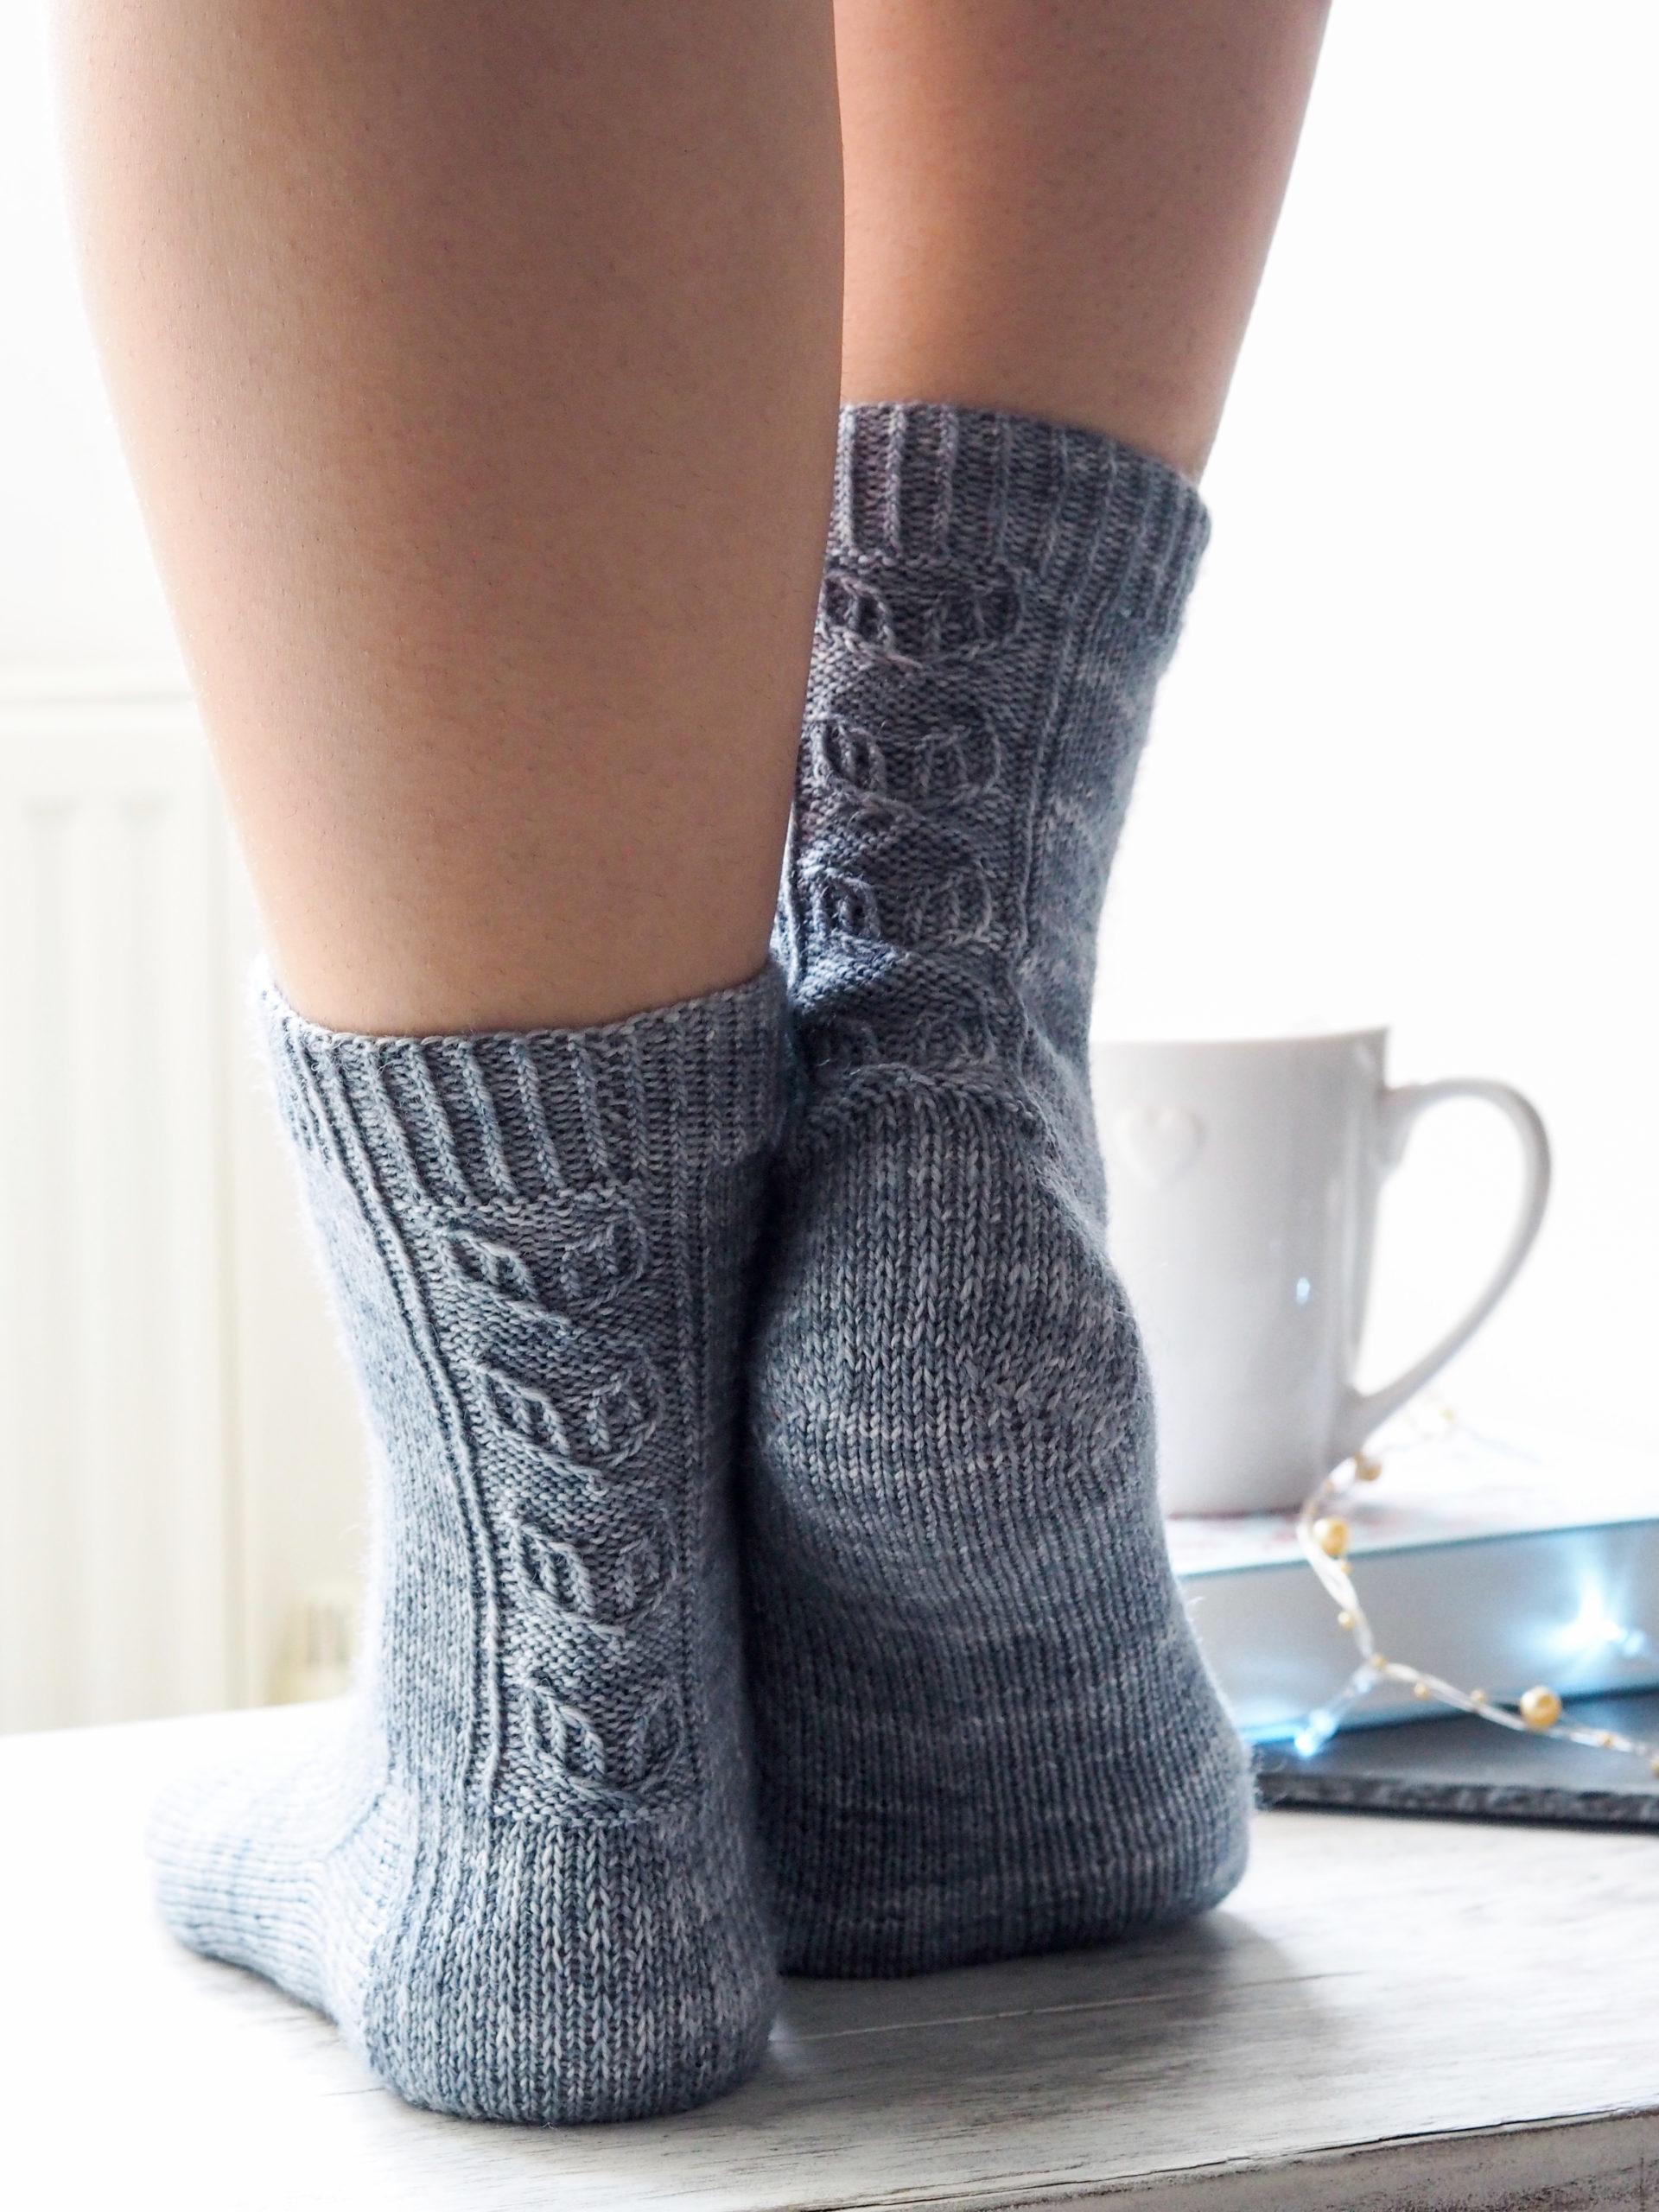 Ravelry: Ballerina socks pattern by Sari Nordlund